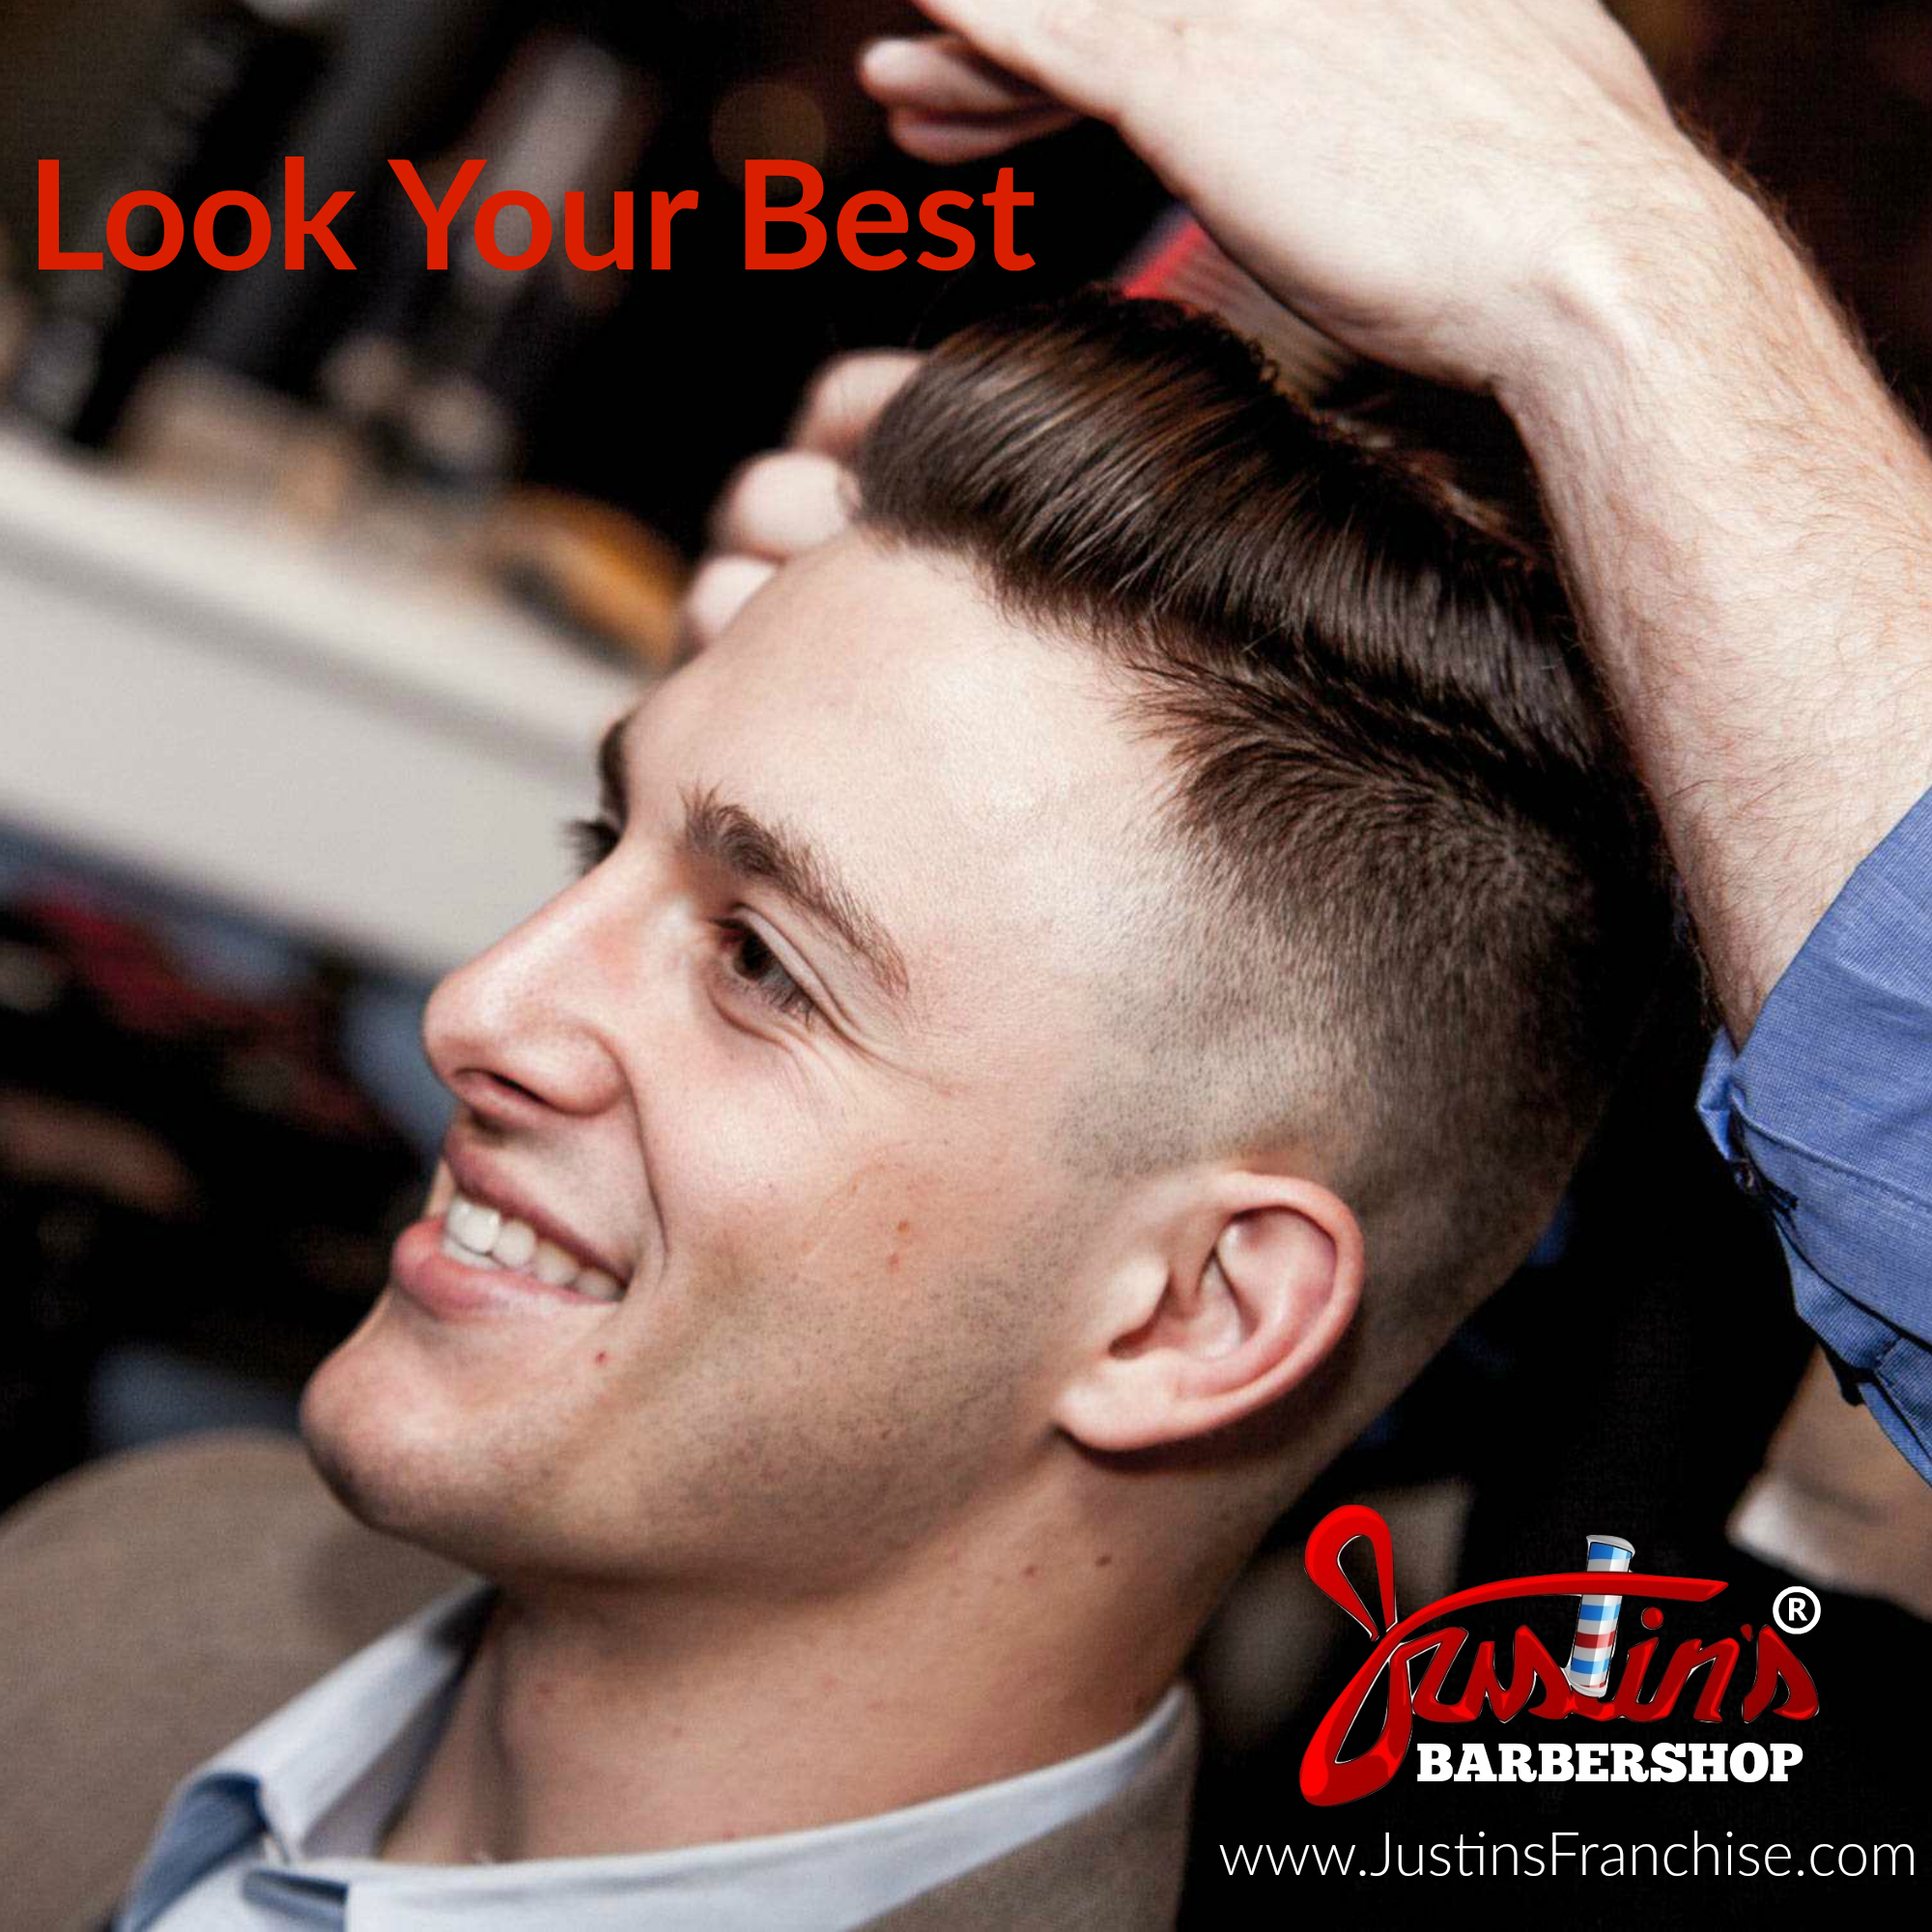 Get Great Haircuts Regularly